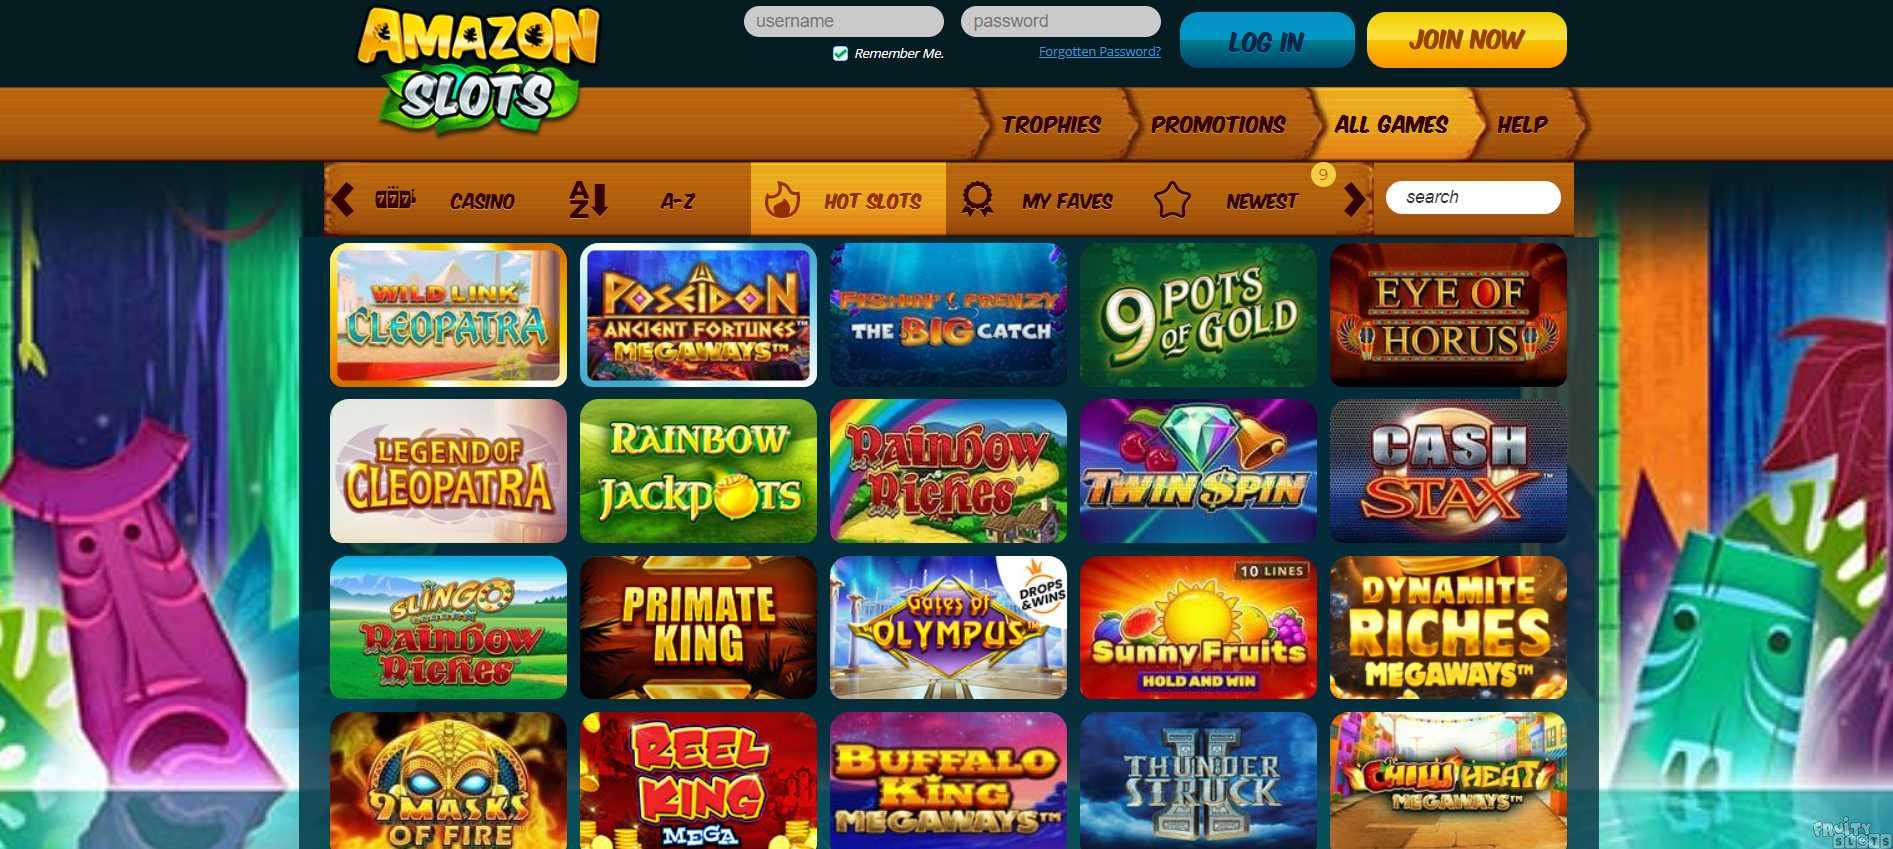 Amazon Slot Casino Slots